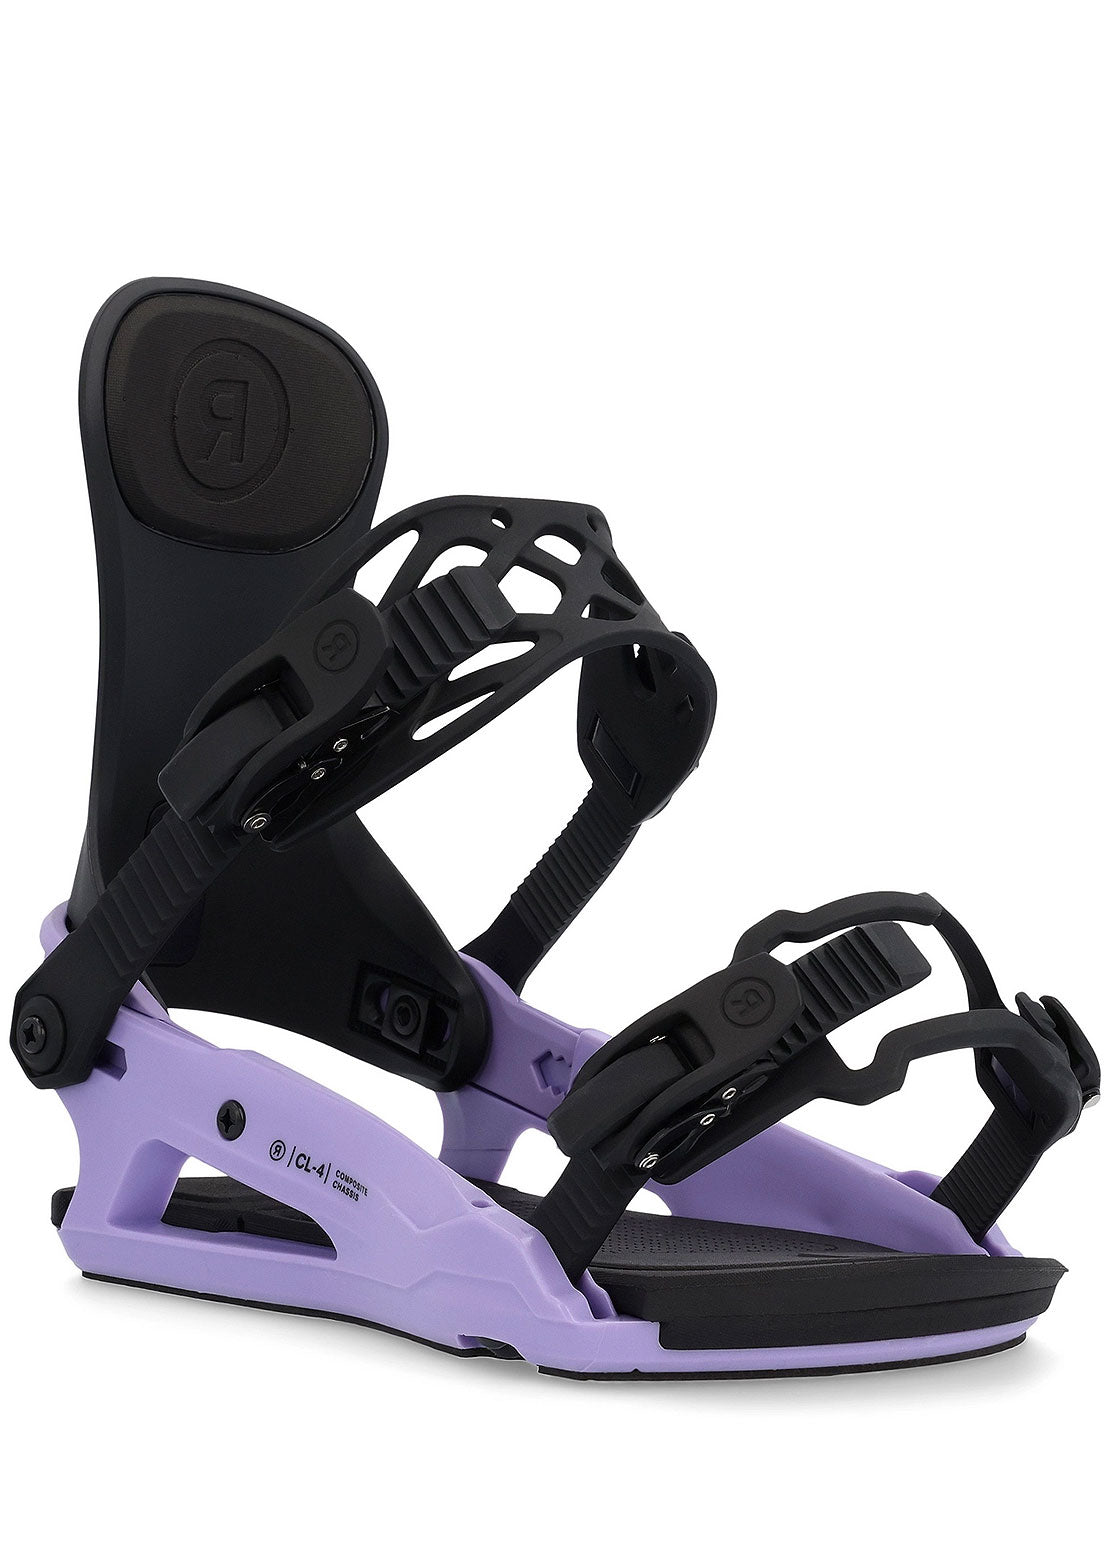 Ride Women&#39;s Cl-4 Snowboard Bindings Digital Violet